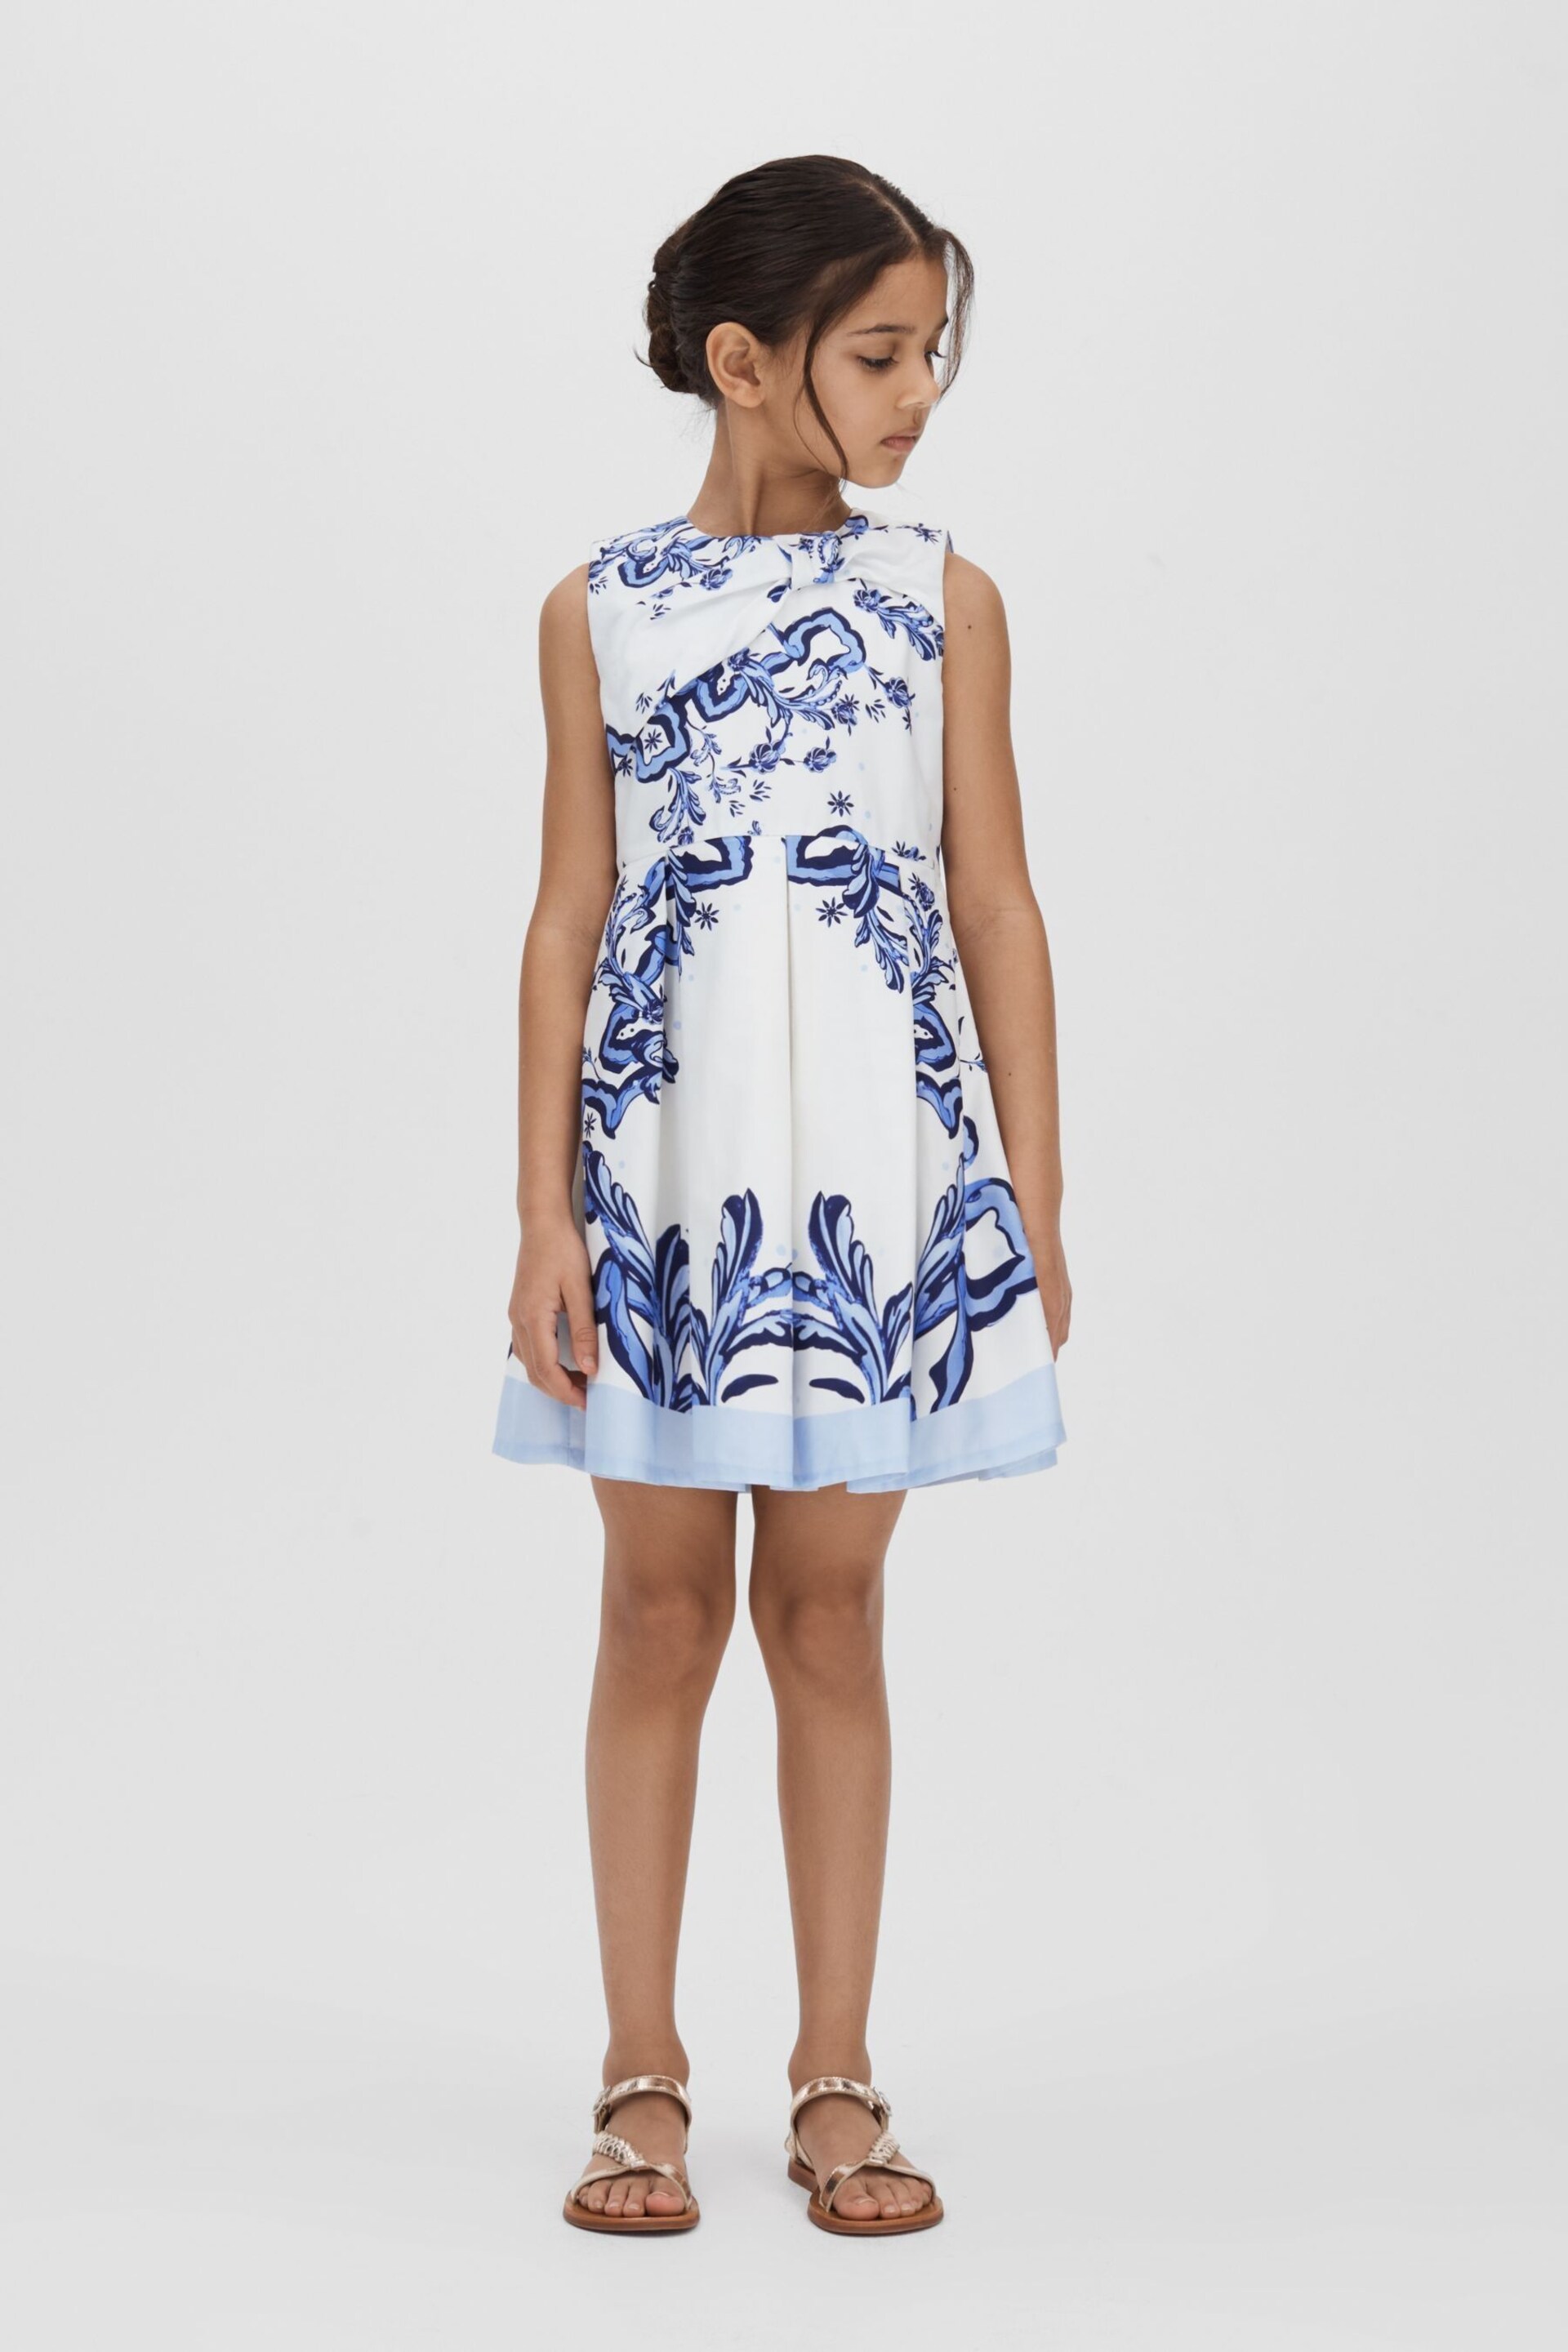 Reiss Blue Print Emiline Teen Cotton Tile Print Pleated Dress - Image 2 of 4